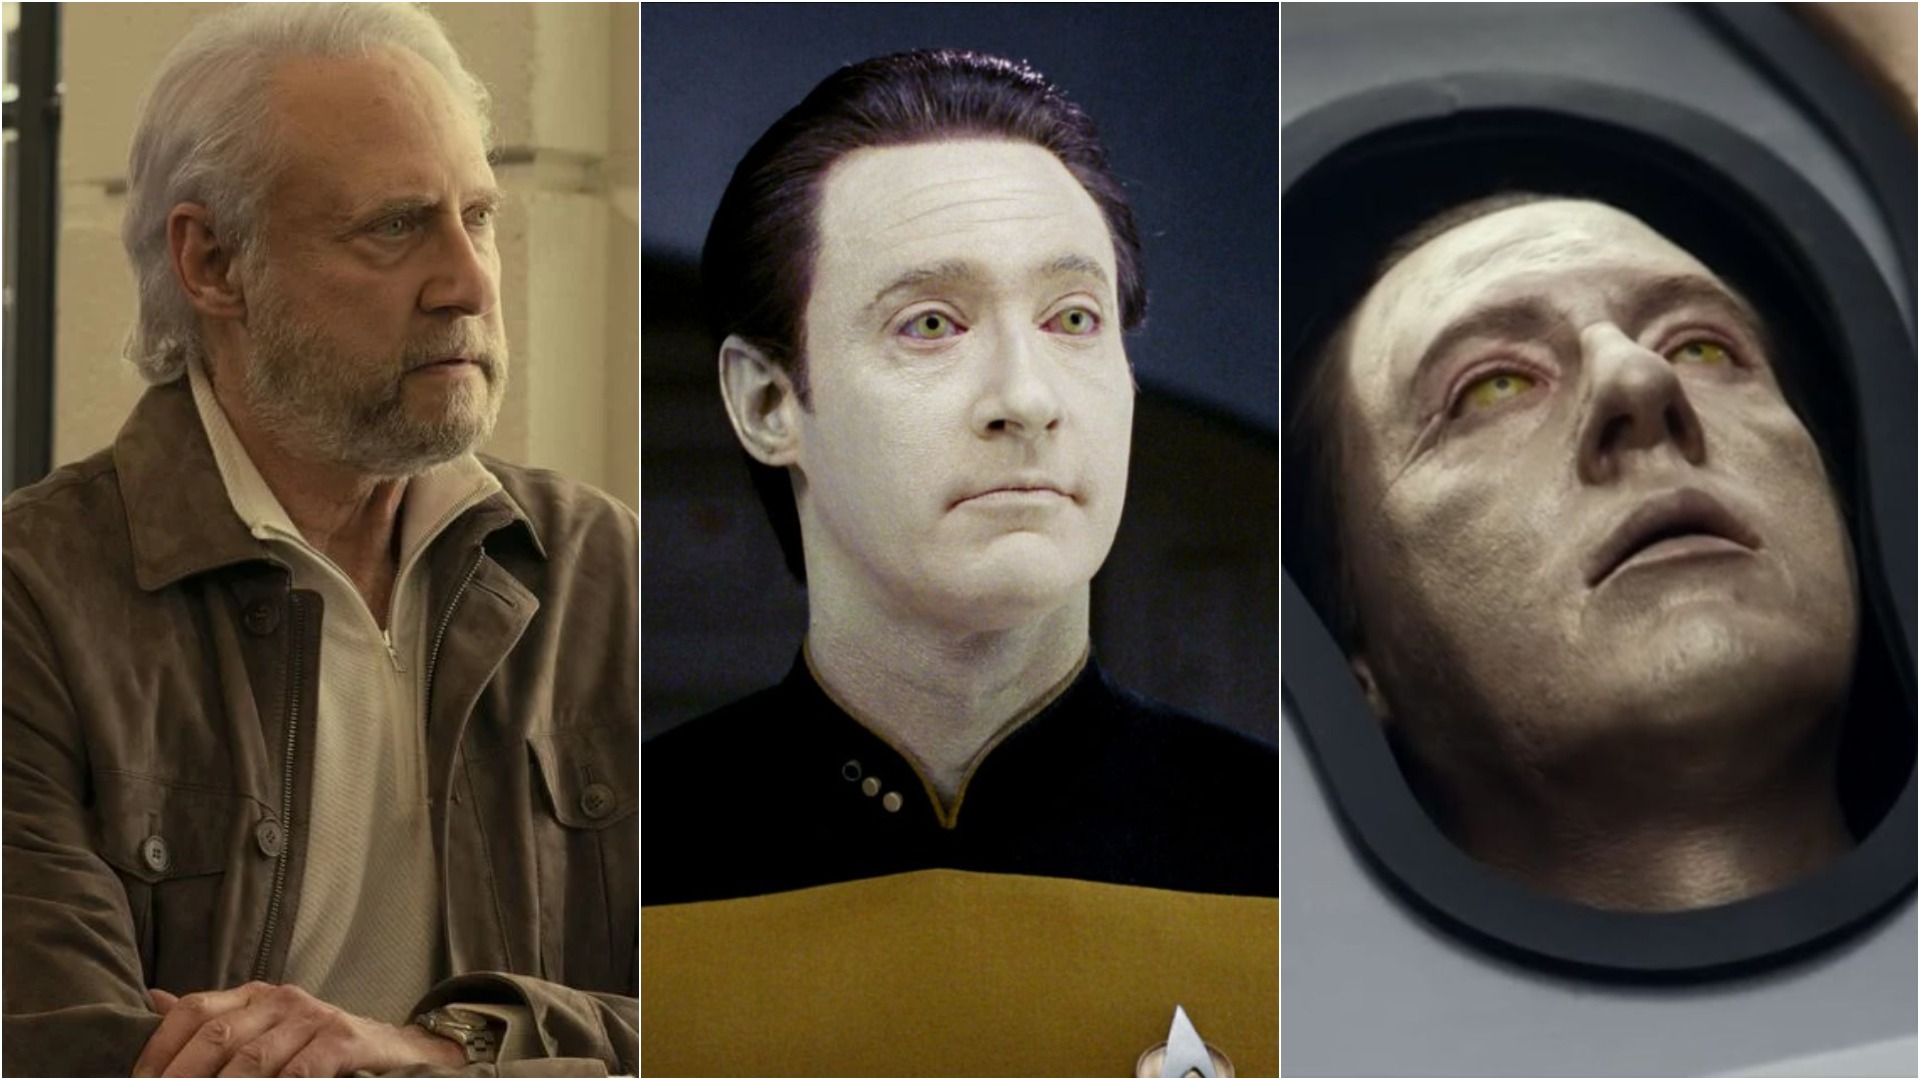 Beyond Data: Brent Spiner’s many roles in the Star Trek series